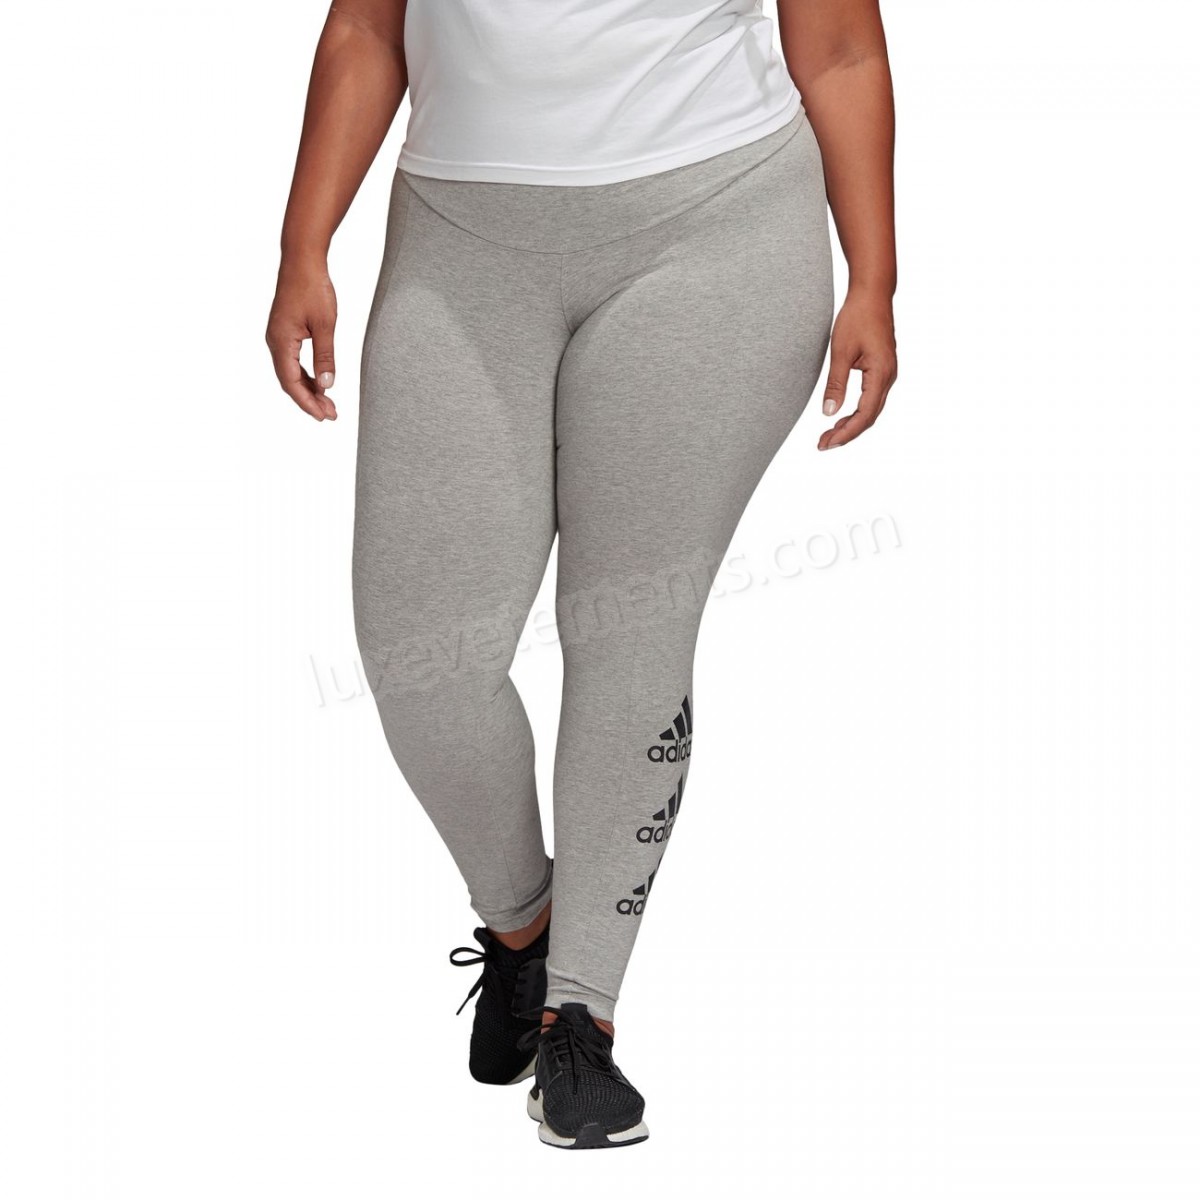 Adidas-Fitness femme ADIDAS Collant femme adidas Stacked Logo Vente en ligne - -3